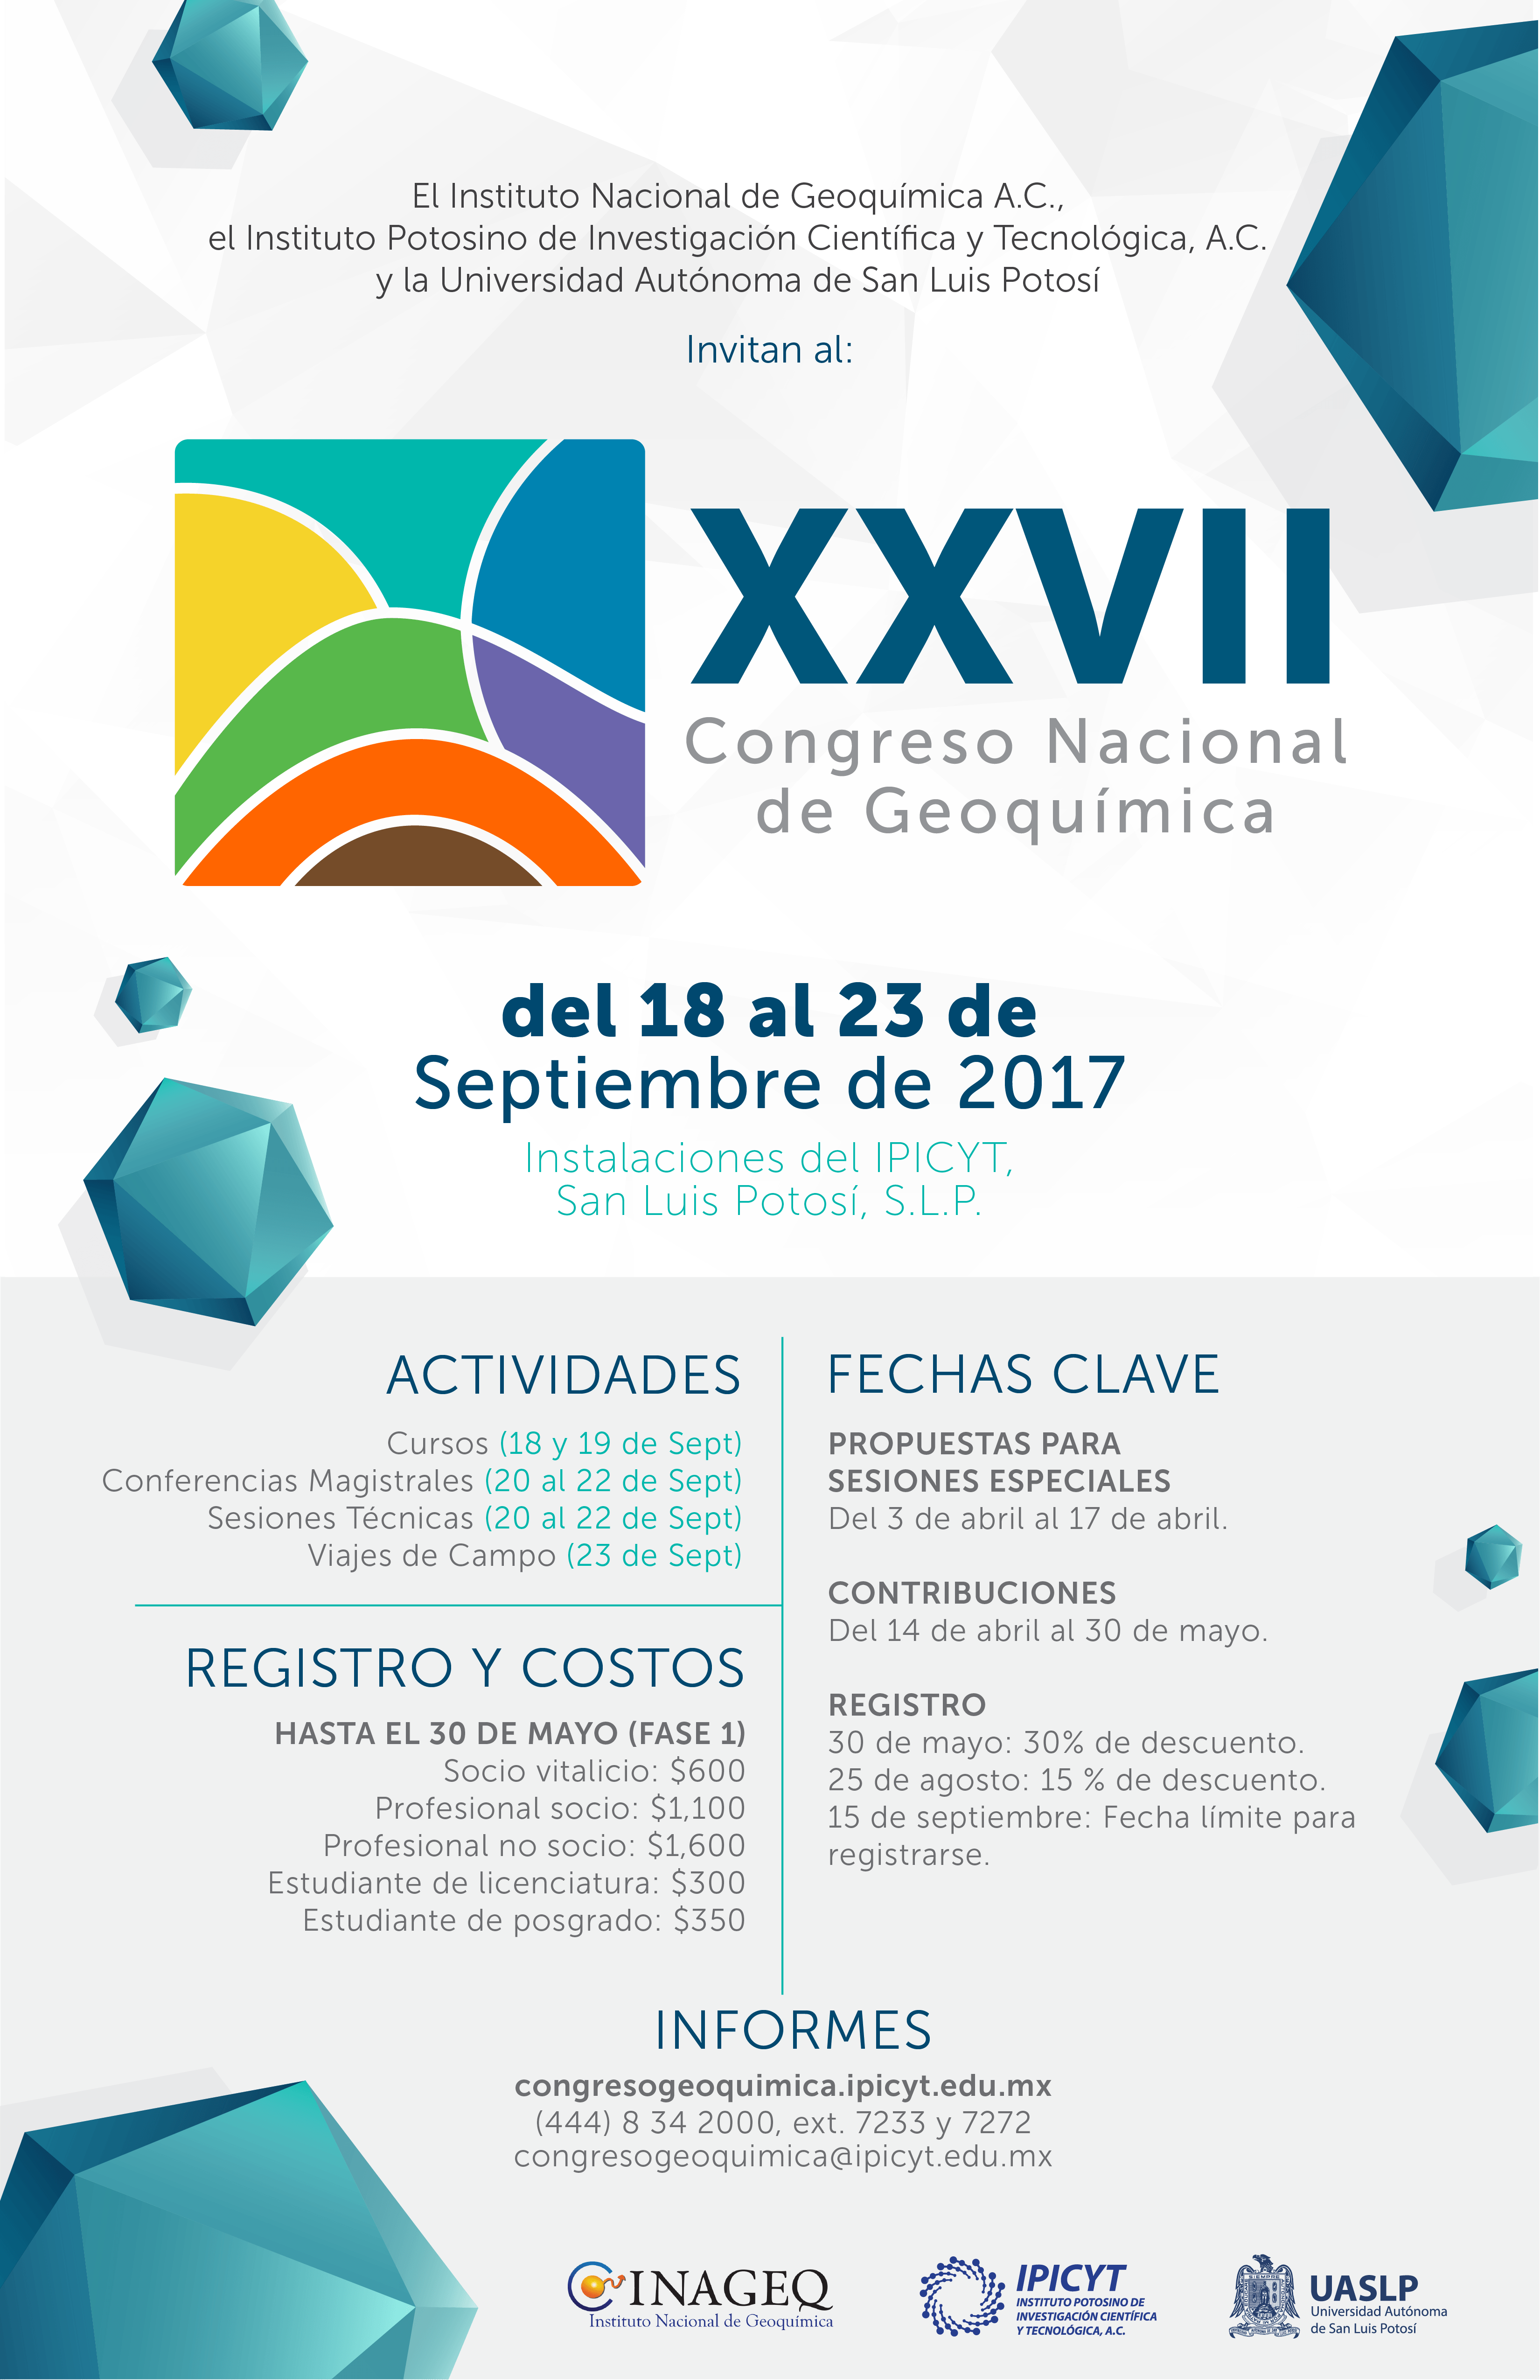 /cms/uploads/image/file/289151/Congreso_Nacional_Geoquimica_2017.png